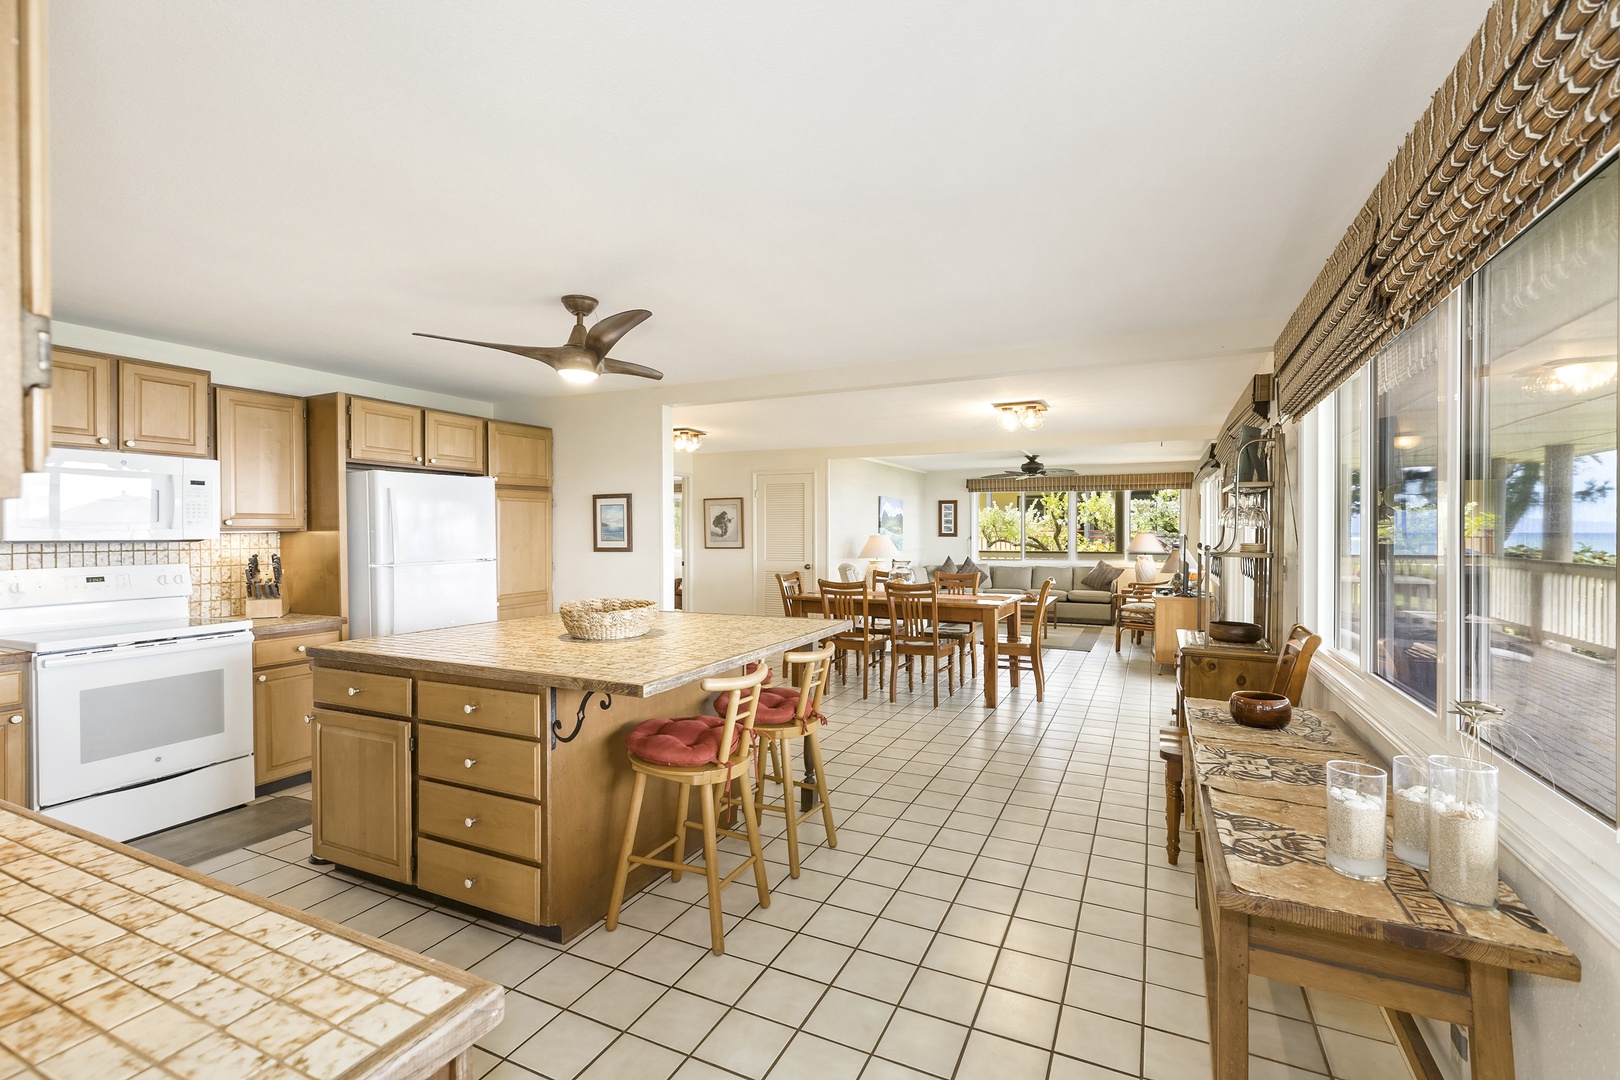 Haleiwa Vacation Rentals, Hale Kimo - The spacious kitchen has plenty of storage and workareas.